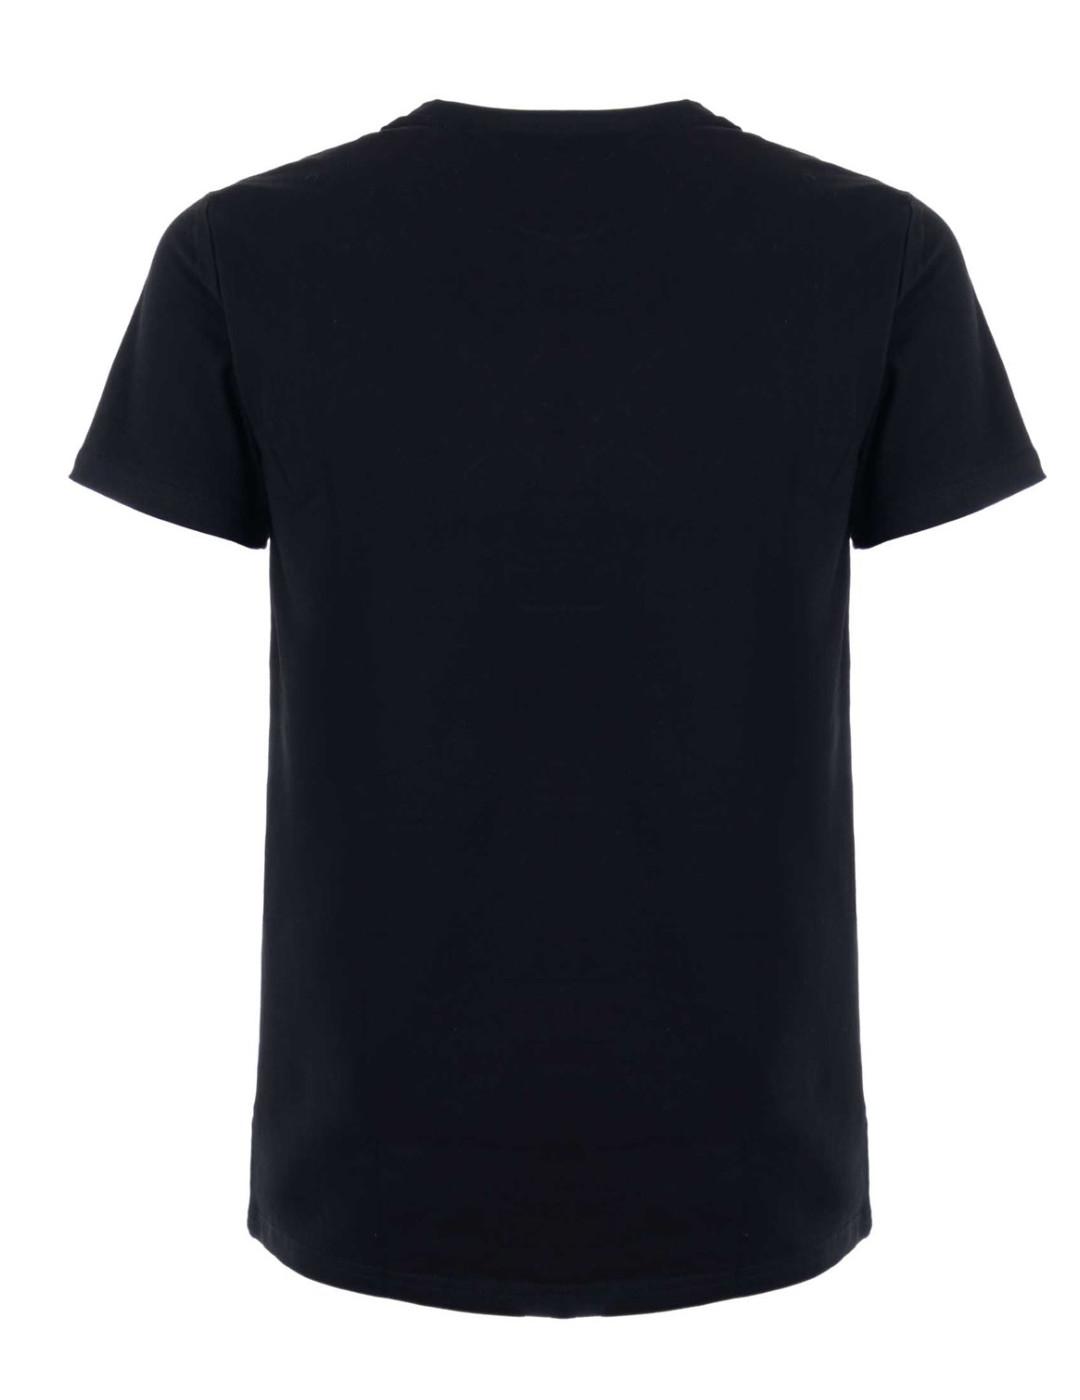 Camiseta ProjectxParis negra logo blanco manga corta unisex